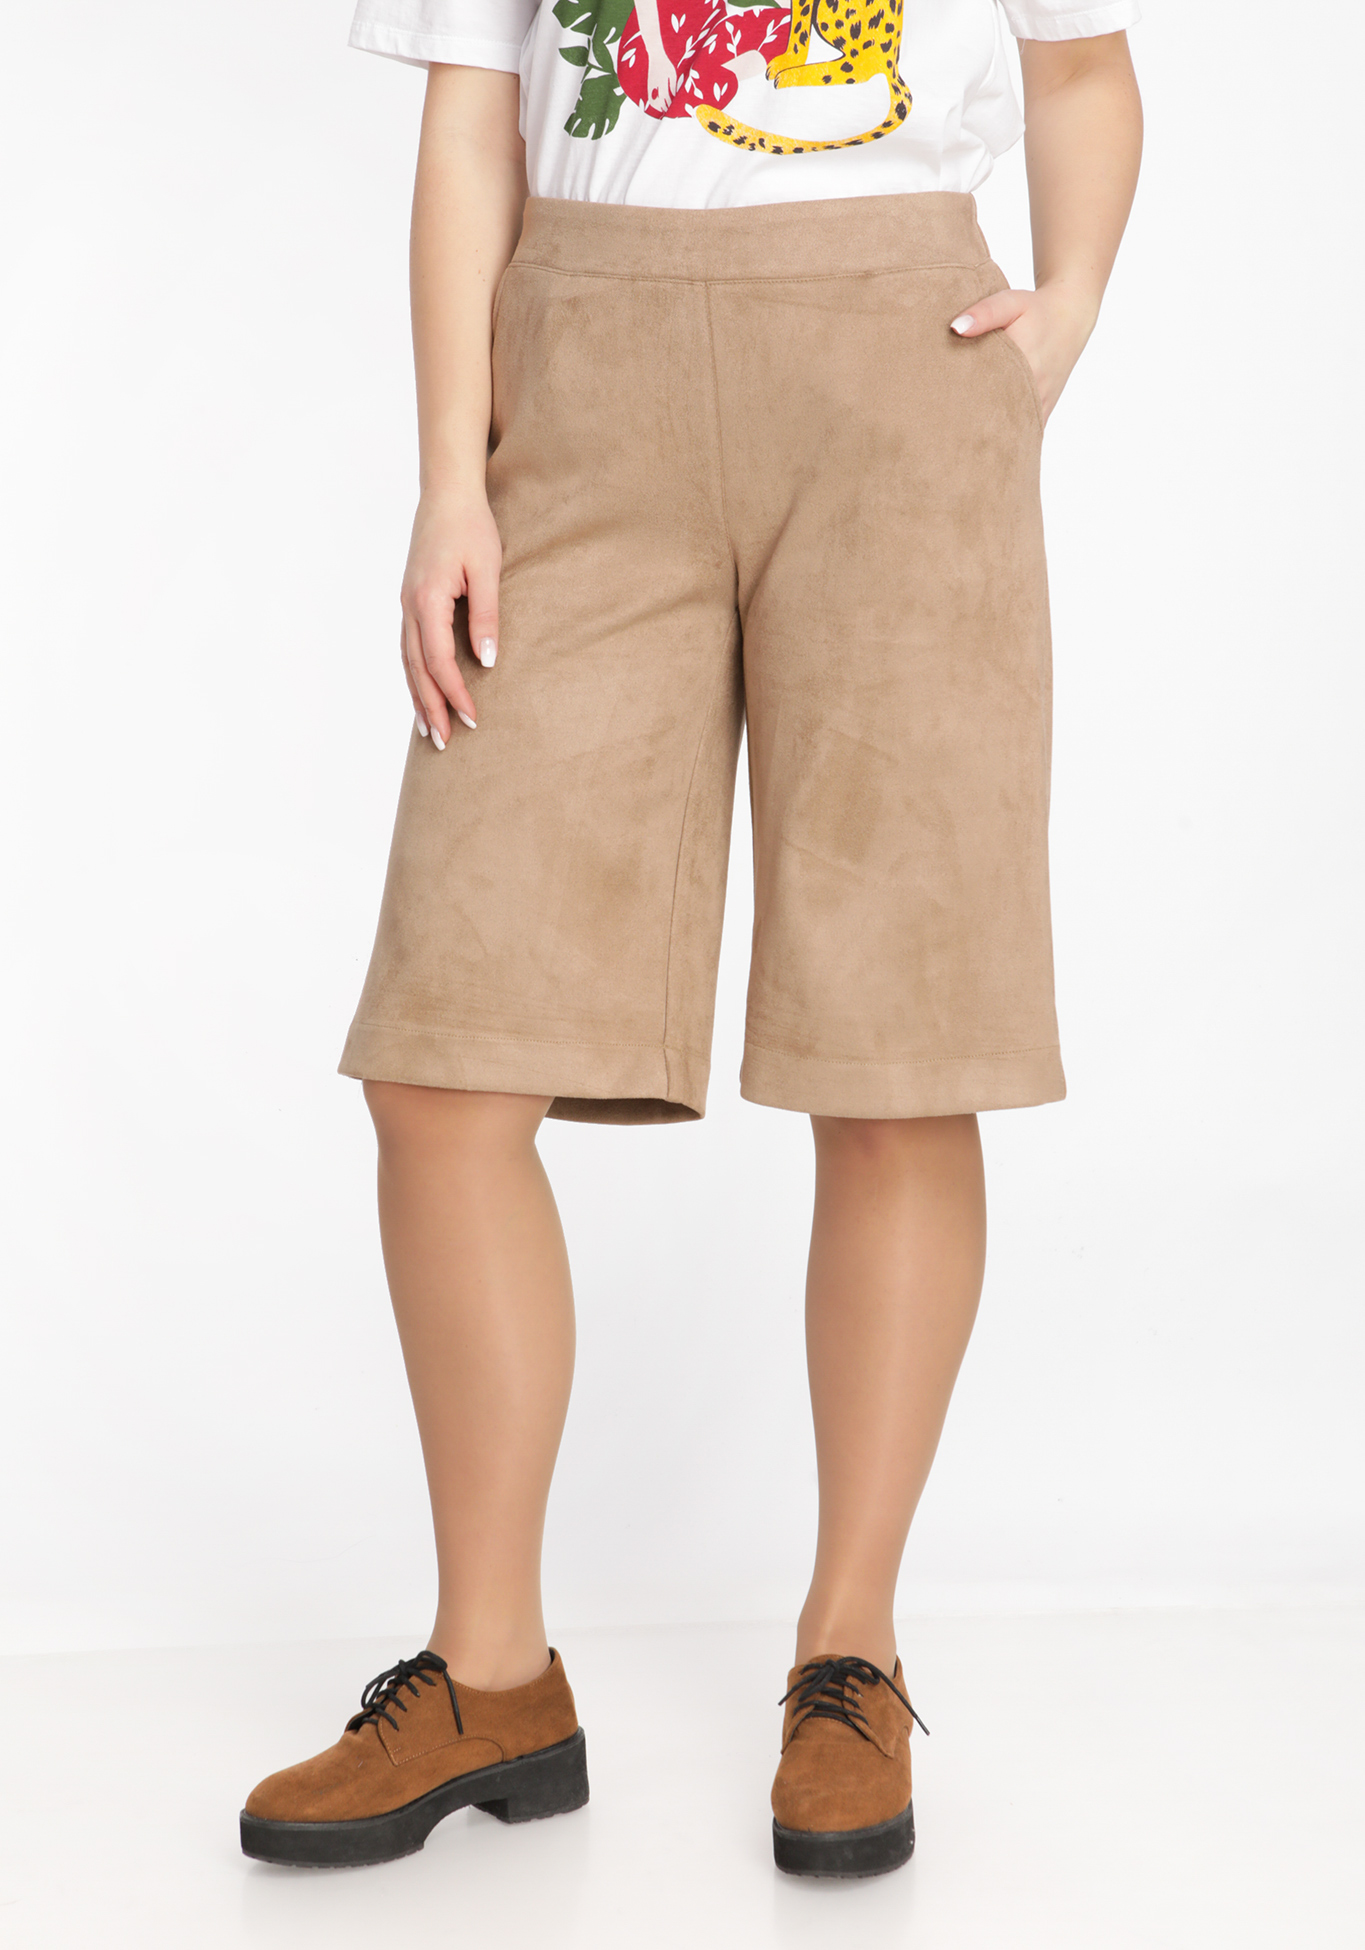 Шорты женские ниже колена из эко-замши Star Fashion, размер 50, цвет бежевый - фото 1